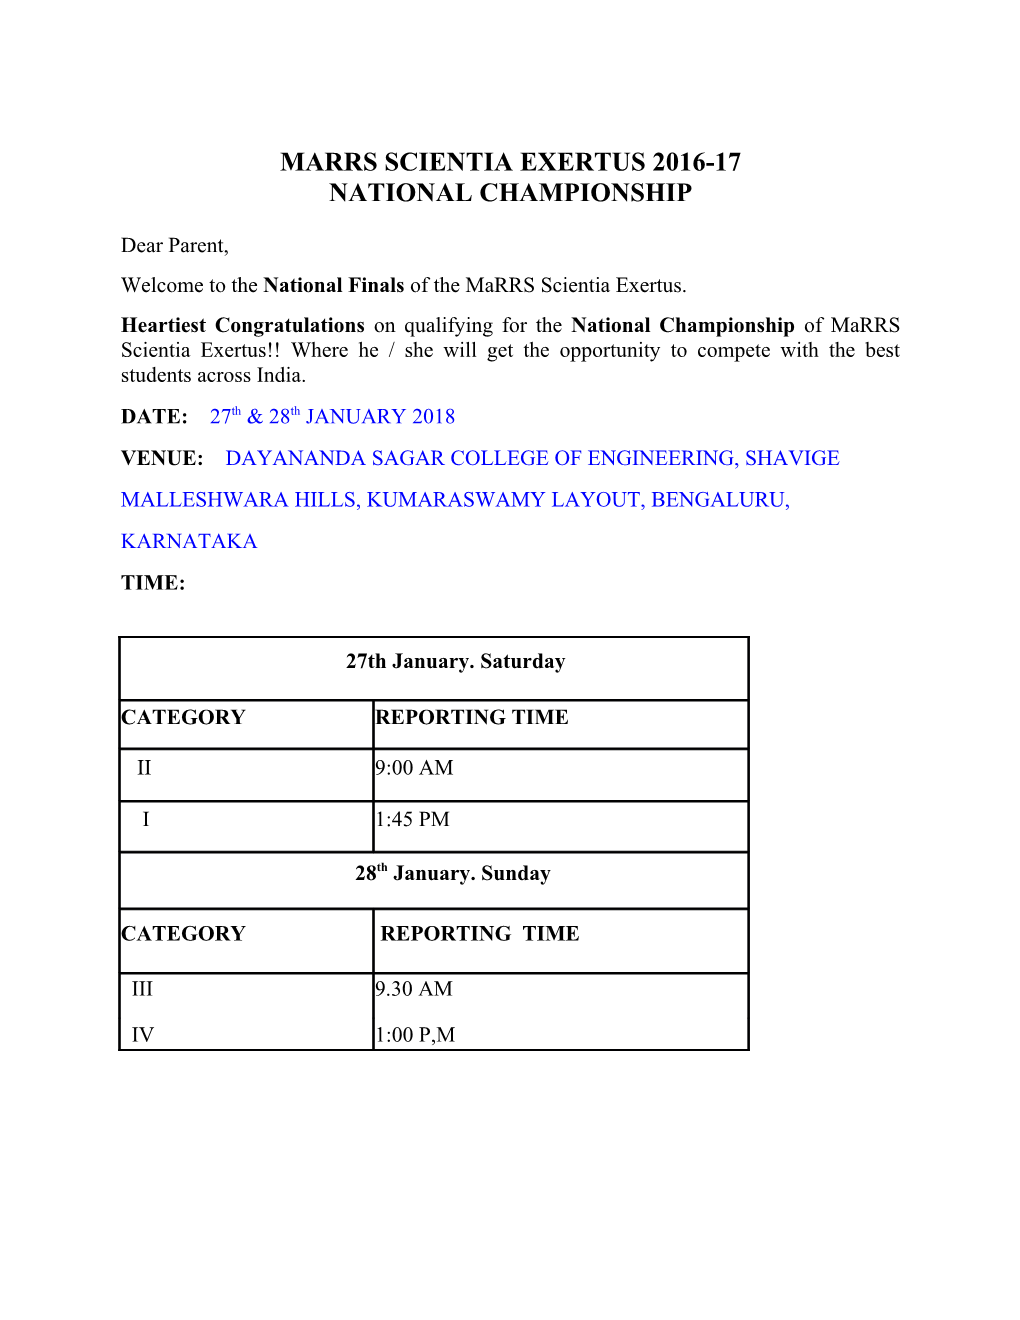 National Championship